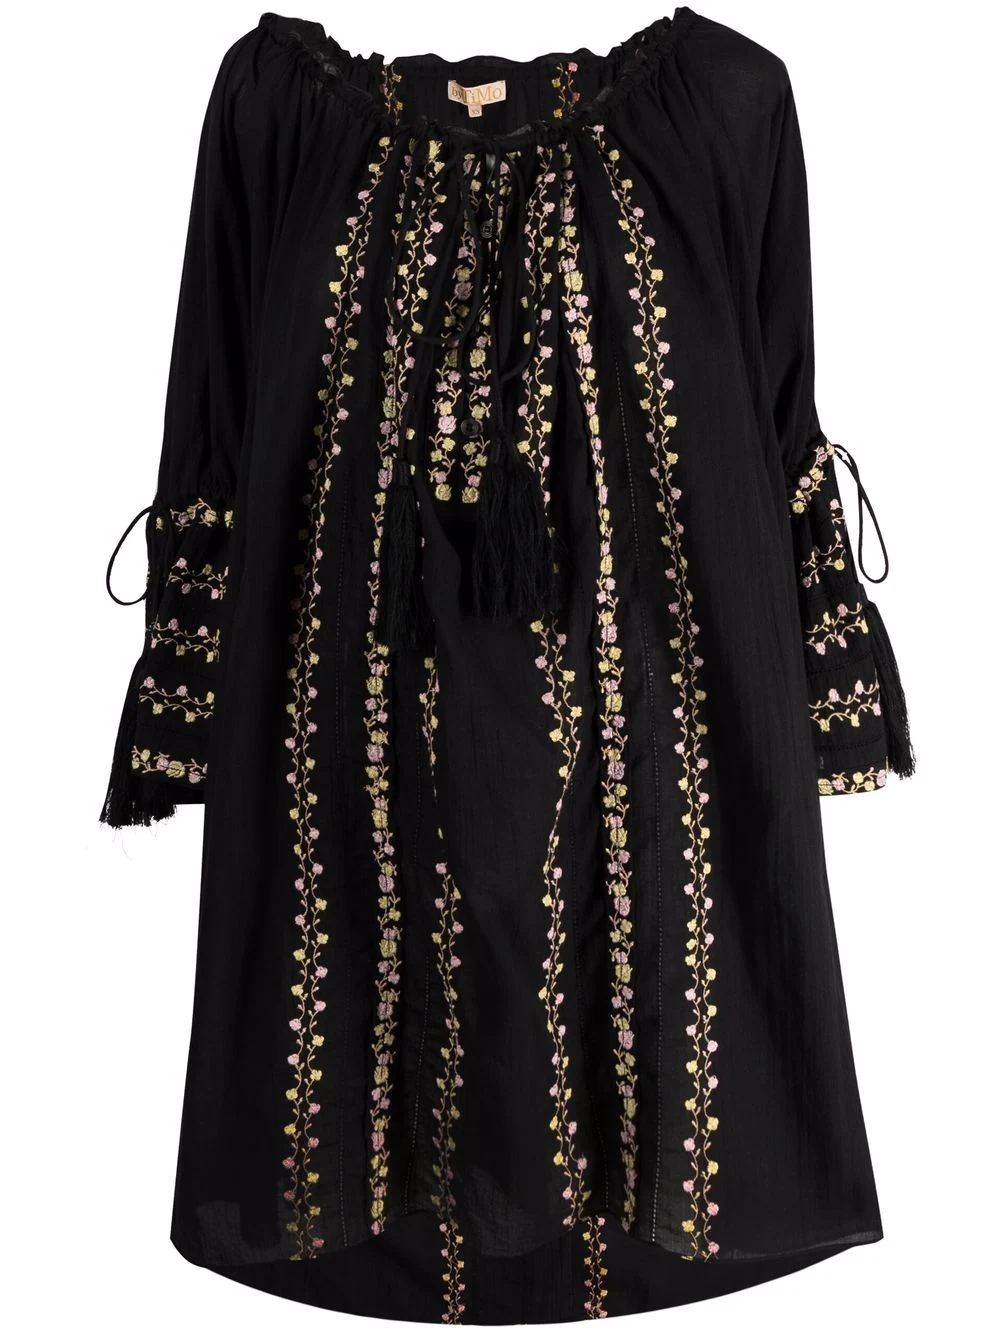 Embroidery big skirt black flowers cotton dress